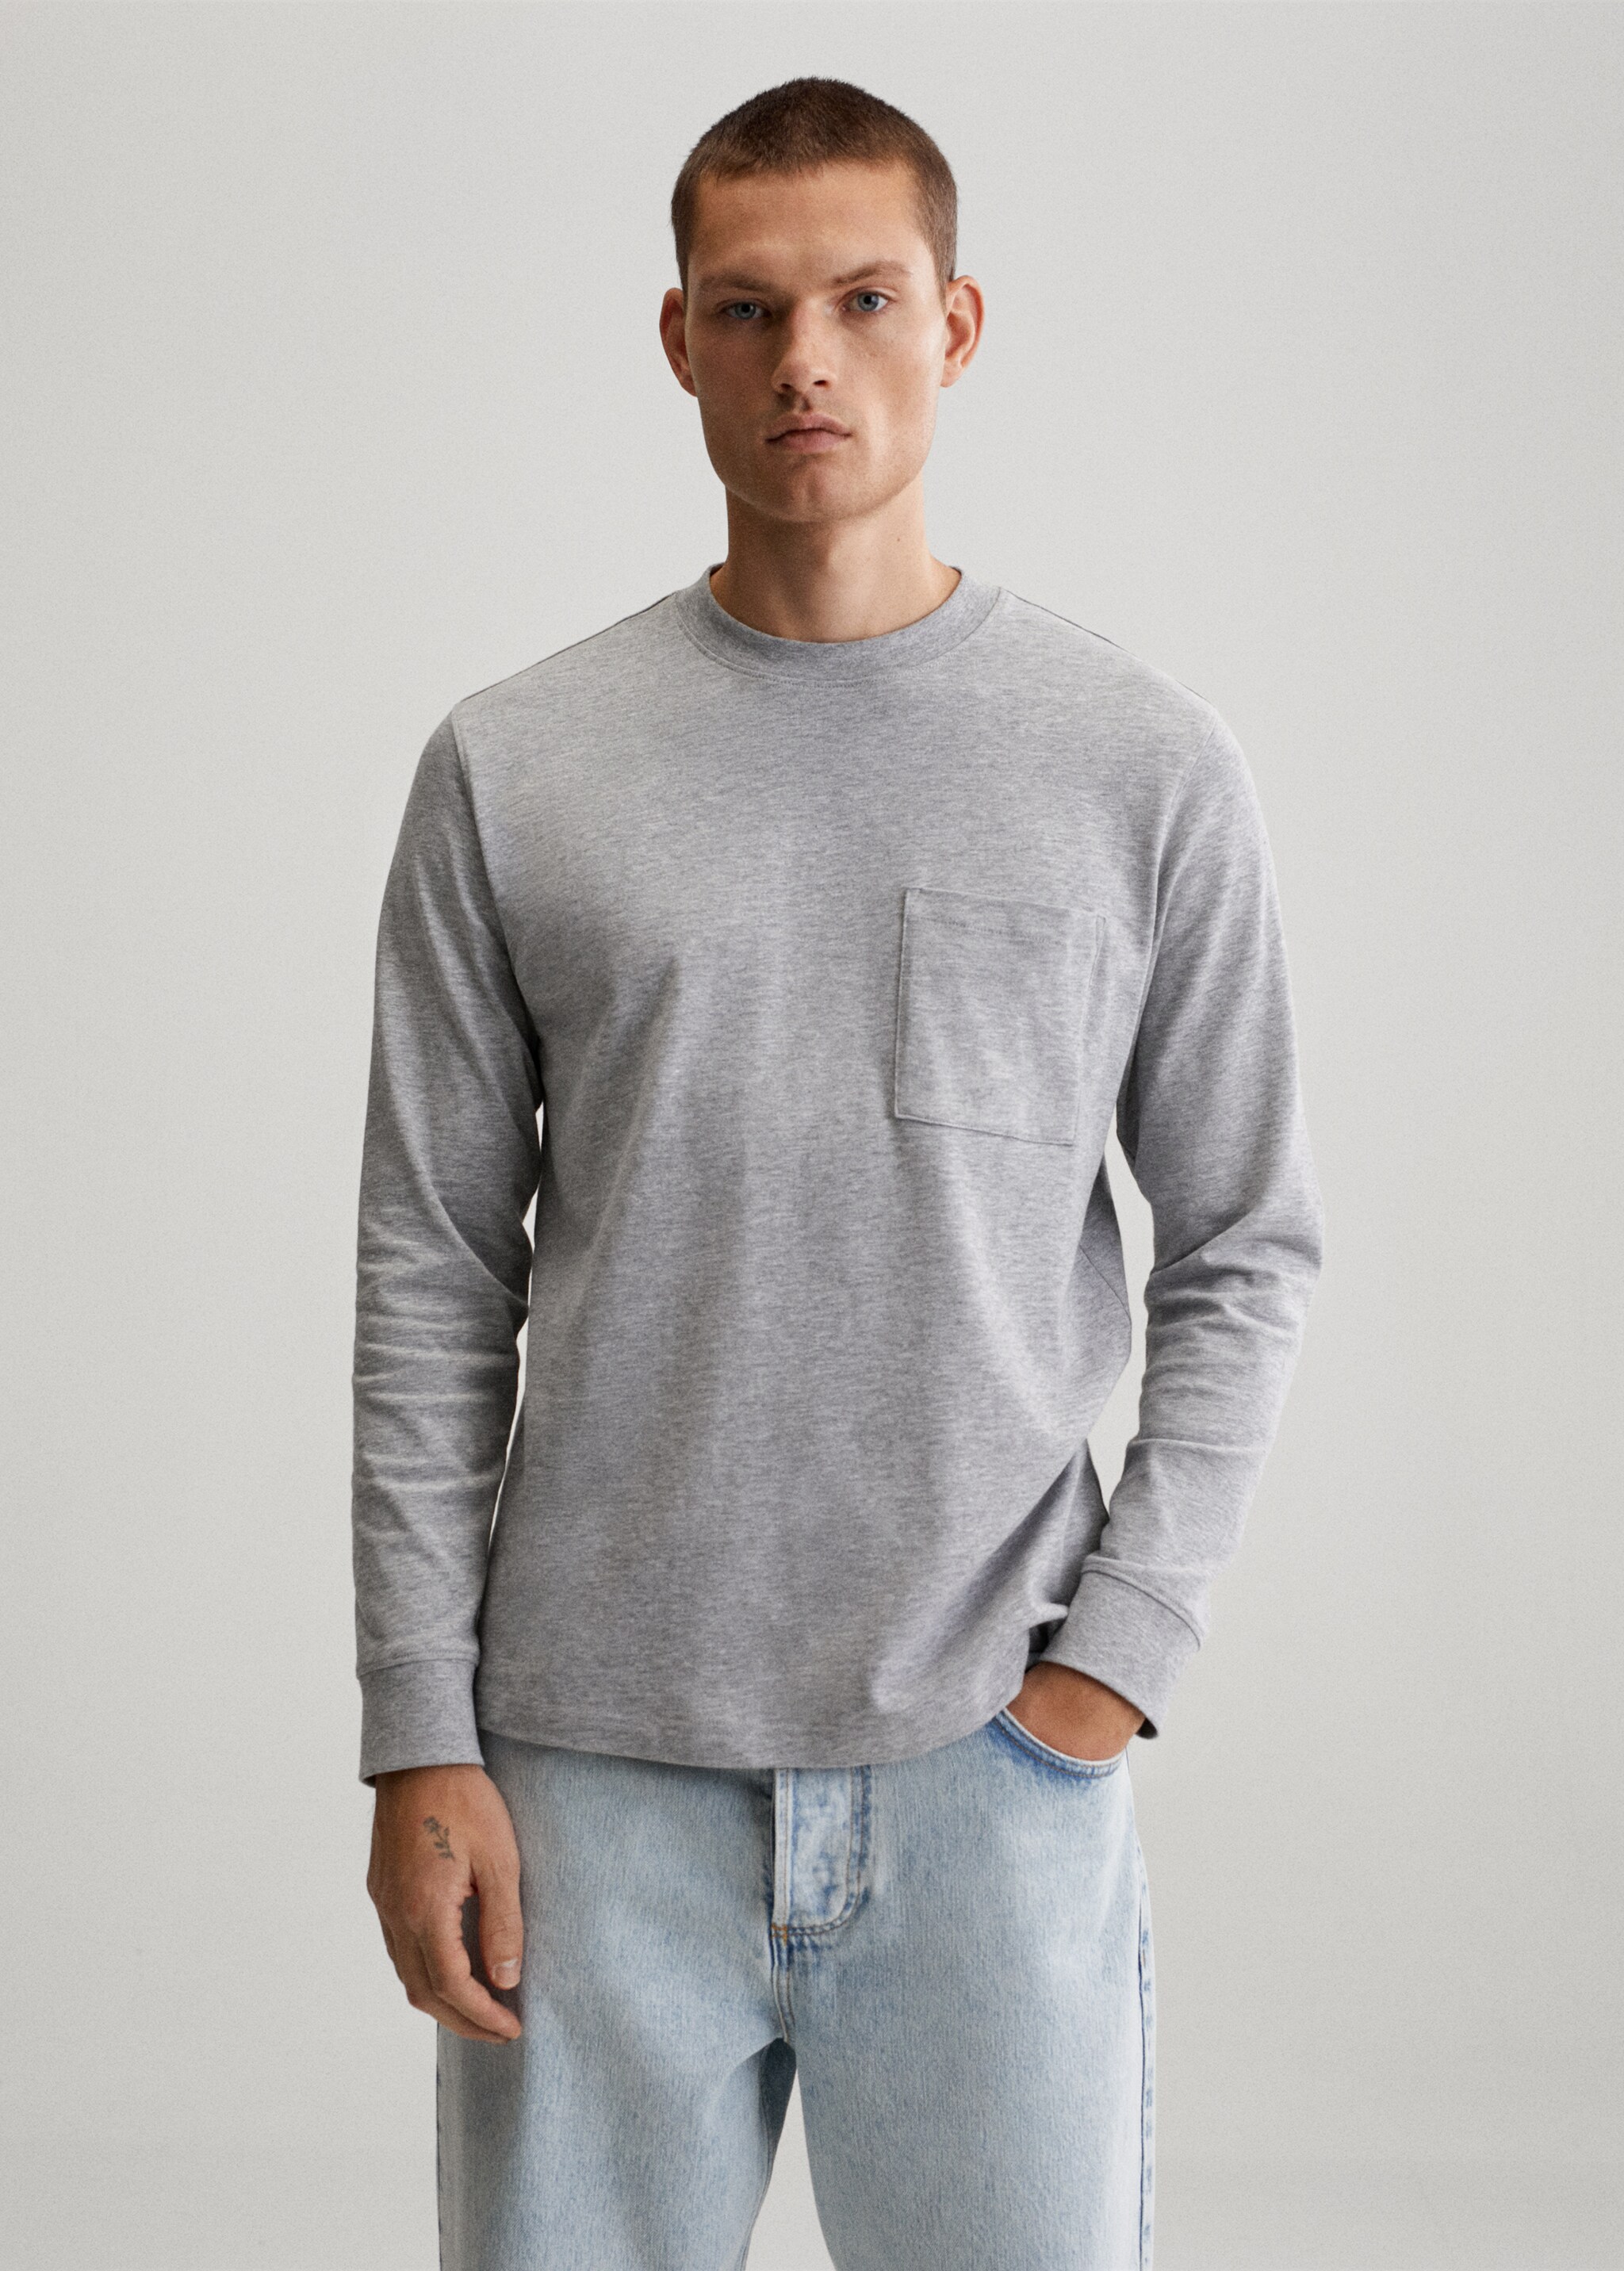 Camiseta manga larga Tiago - Plano medio